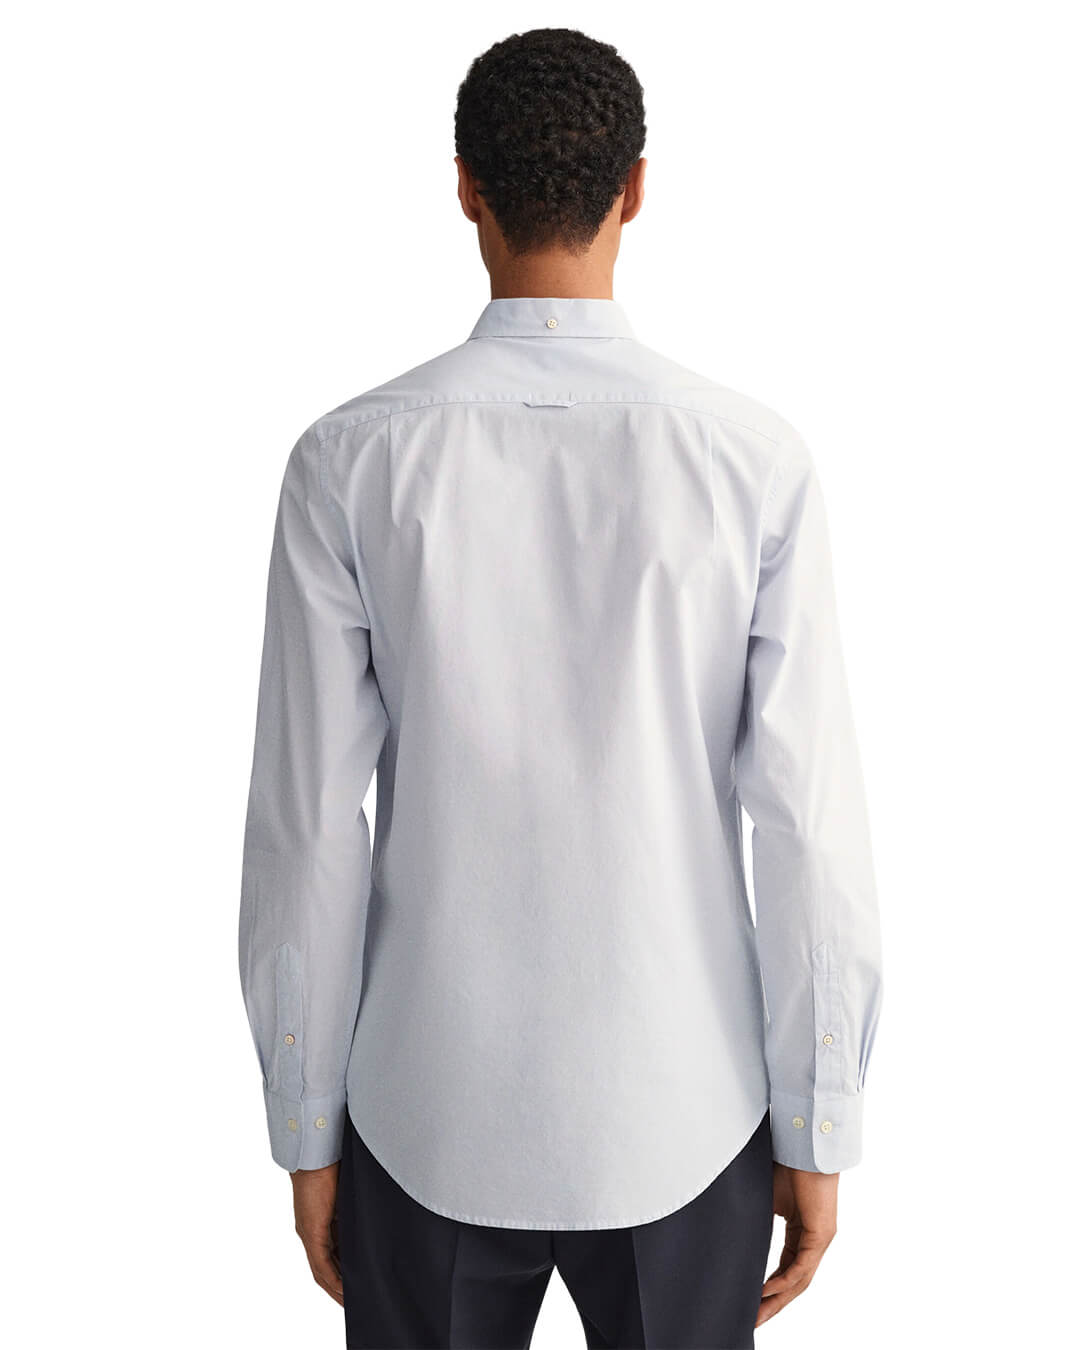 Gant Shirts Gant Sky Blue Slim Fit Broadcloth Shirt